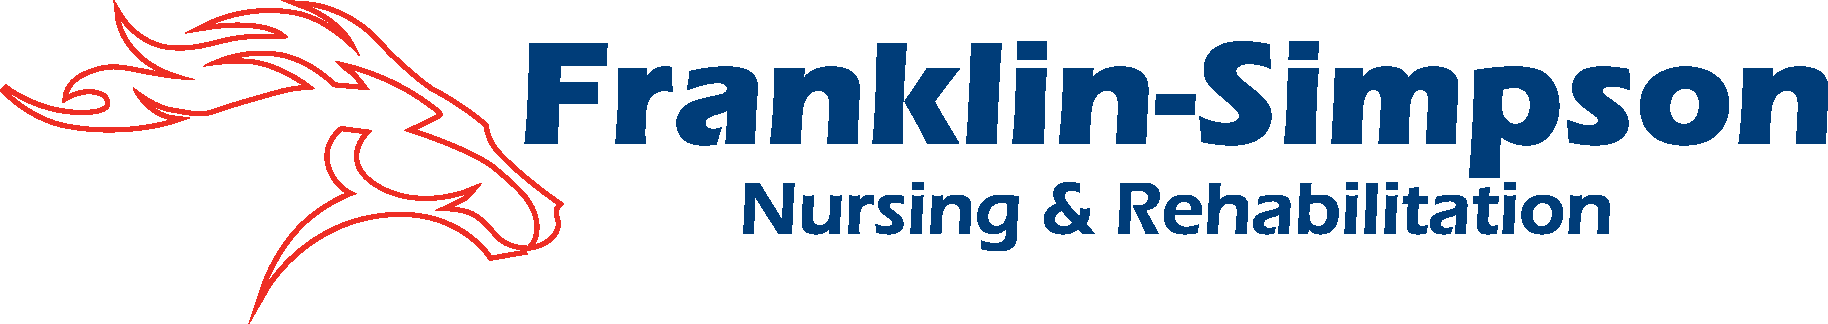 Franklin-Simpson Nursing & Rehabilitation [logo]